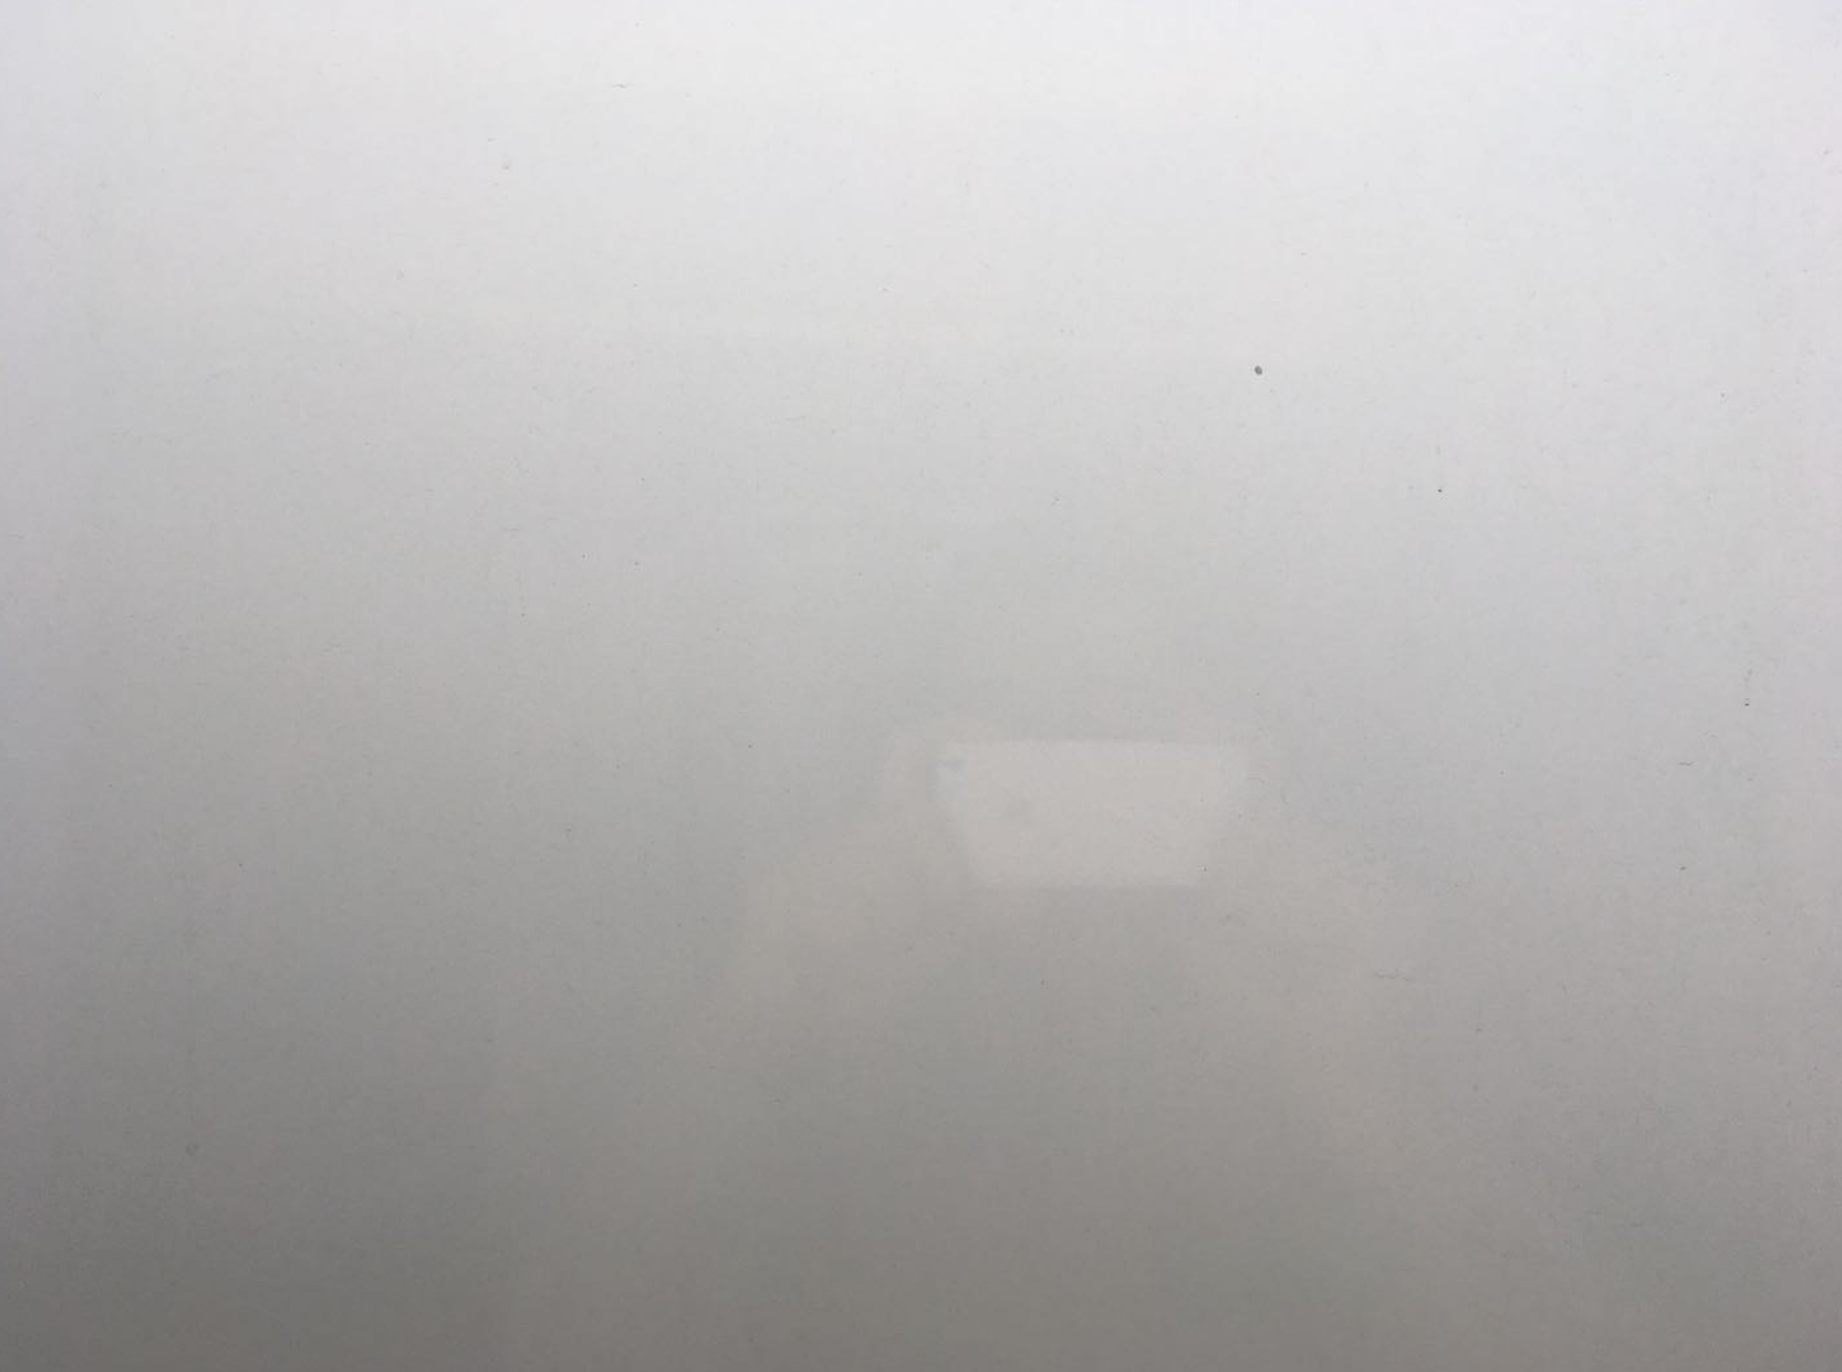 The city of Fog